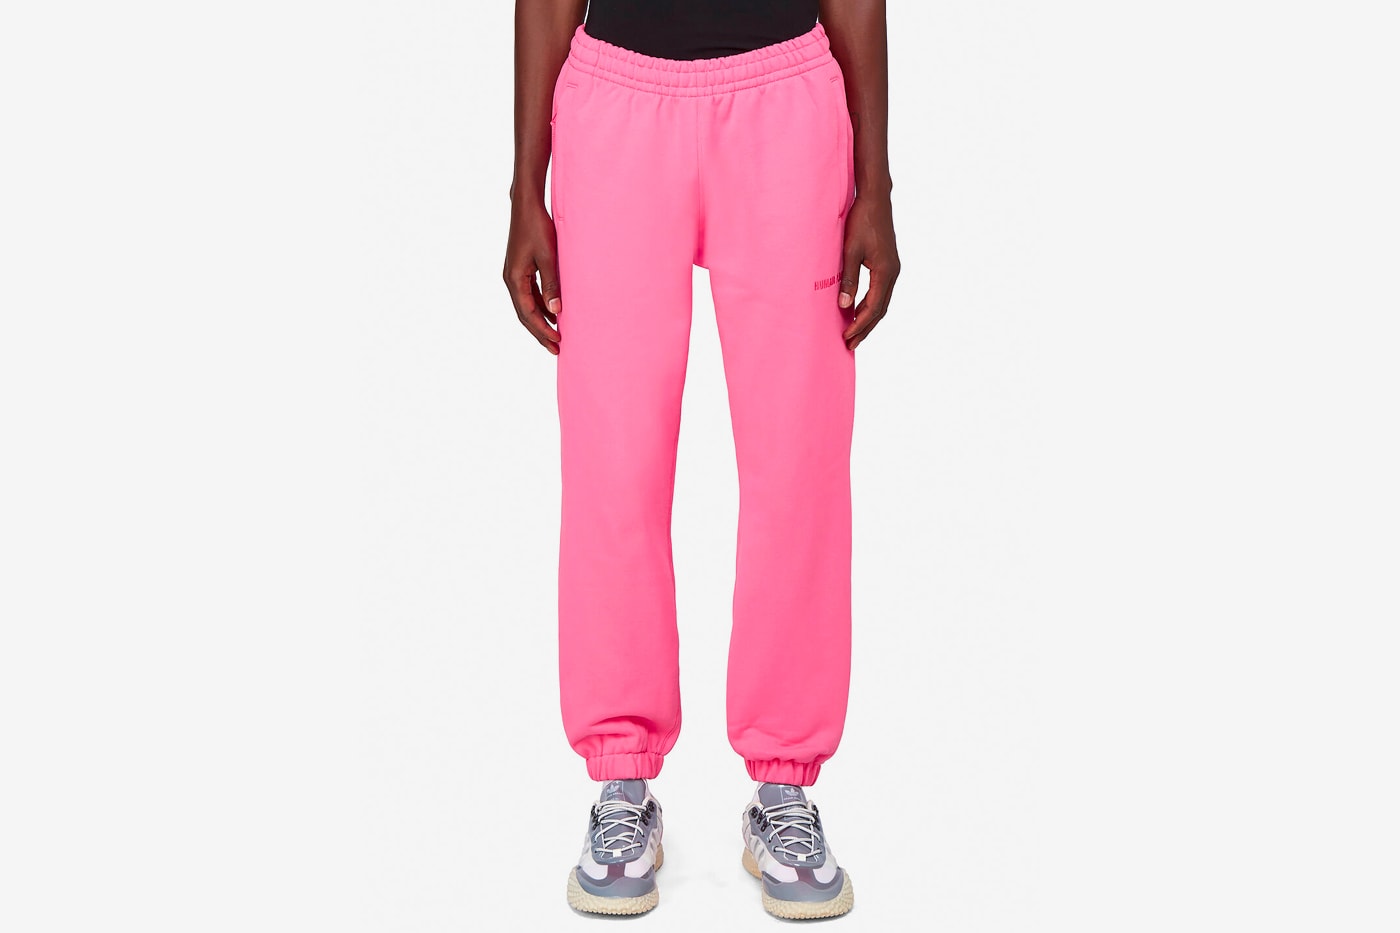 adidas originals Pharrell Williams Basic Line Release LN CC menswear streetwear hoodies t shirts slides footwear